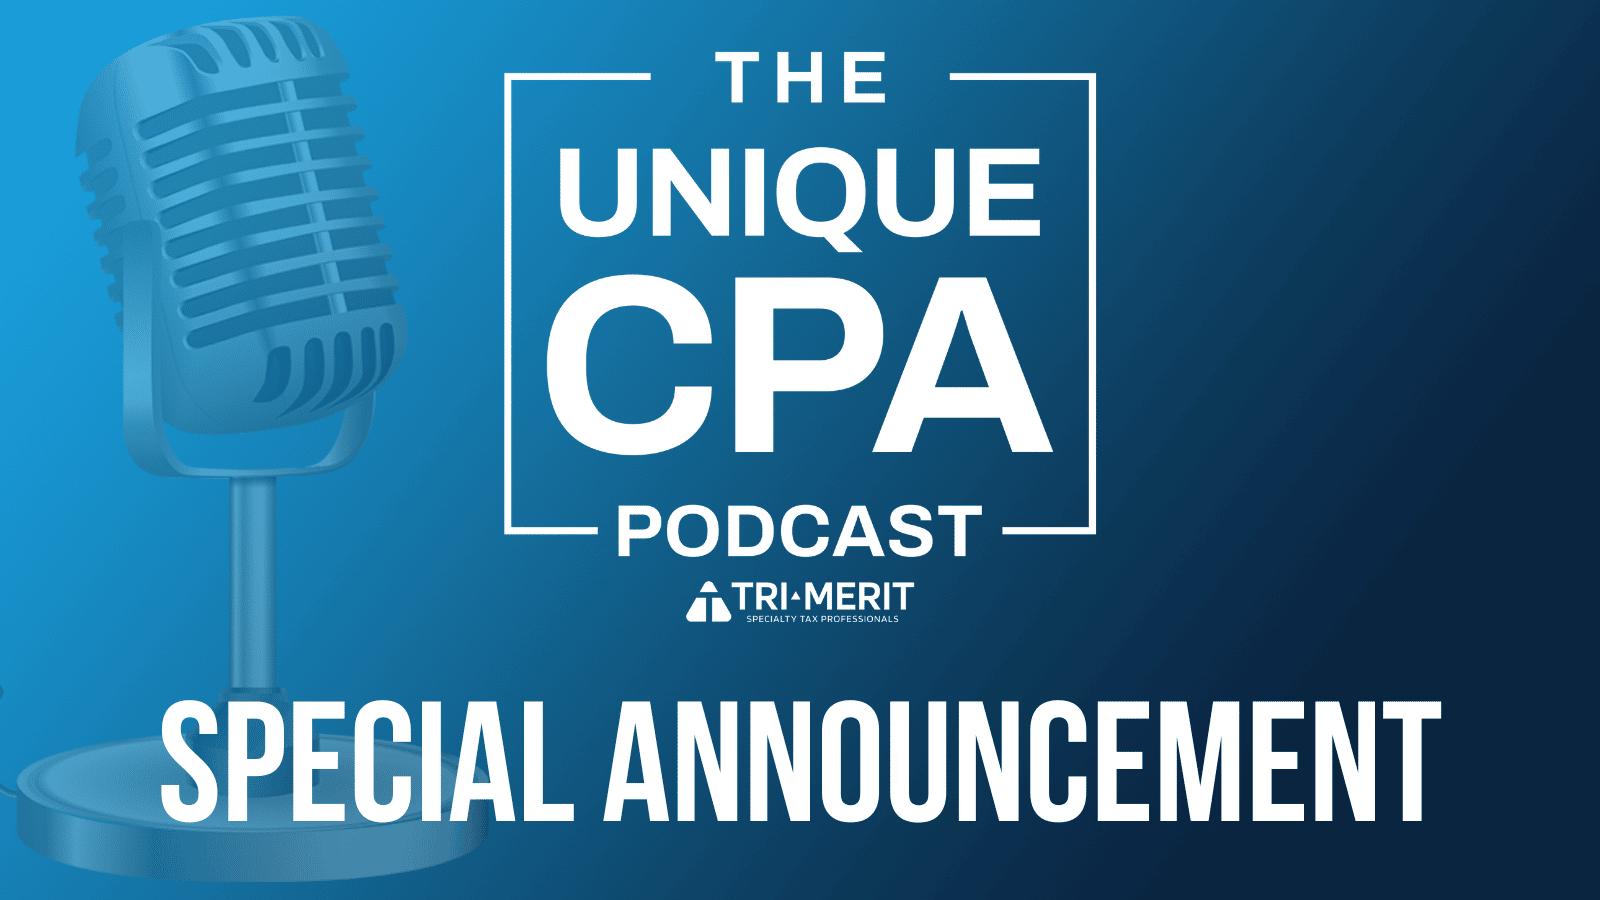 Unique Cpa Special Announcement - The Unique Cpa Special Announcement - Tri-Merit